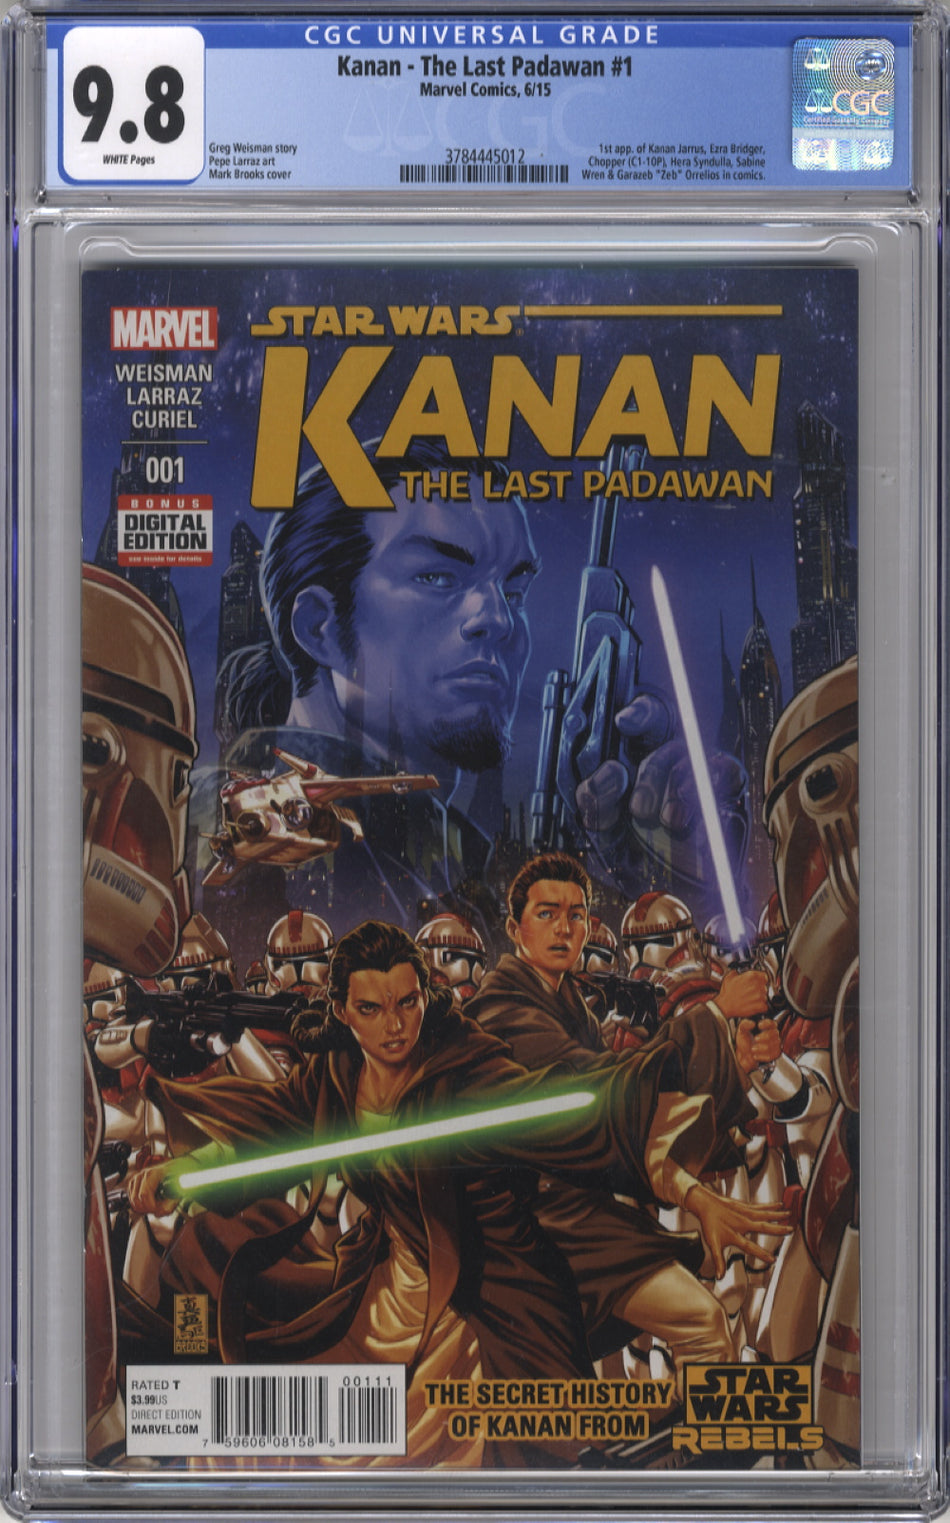 STAR WARS: KANAN THE LAST PADAWAN 001 - CGC 9.8